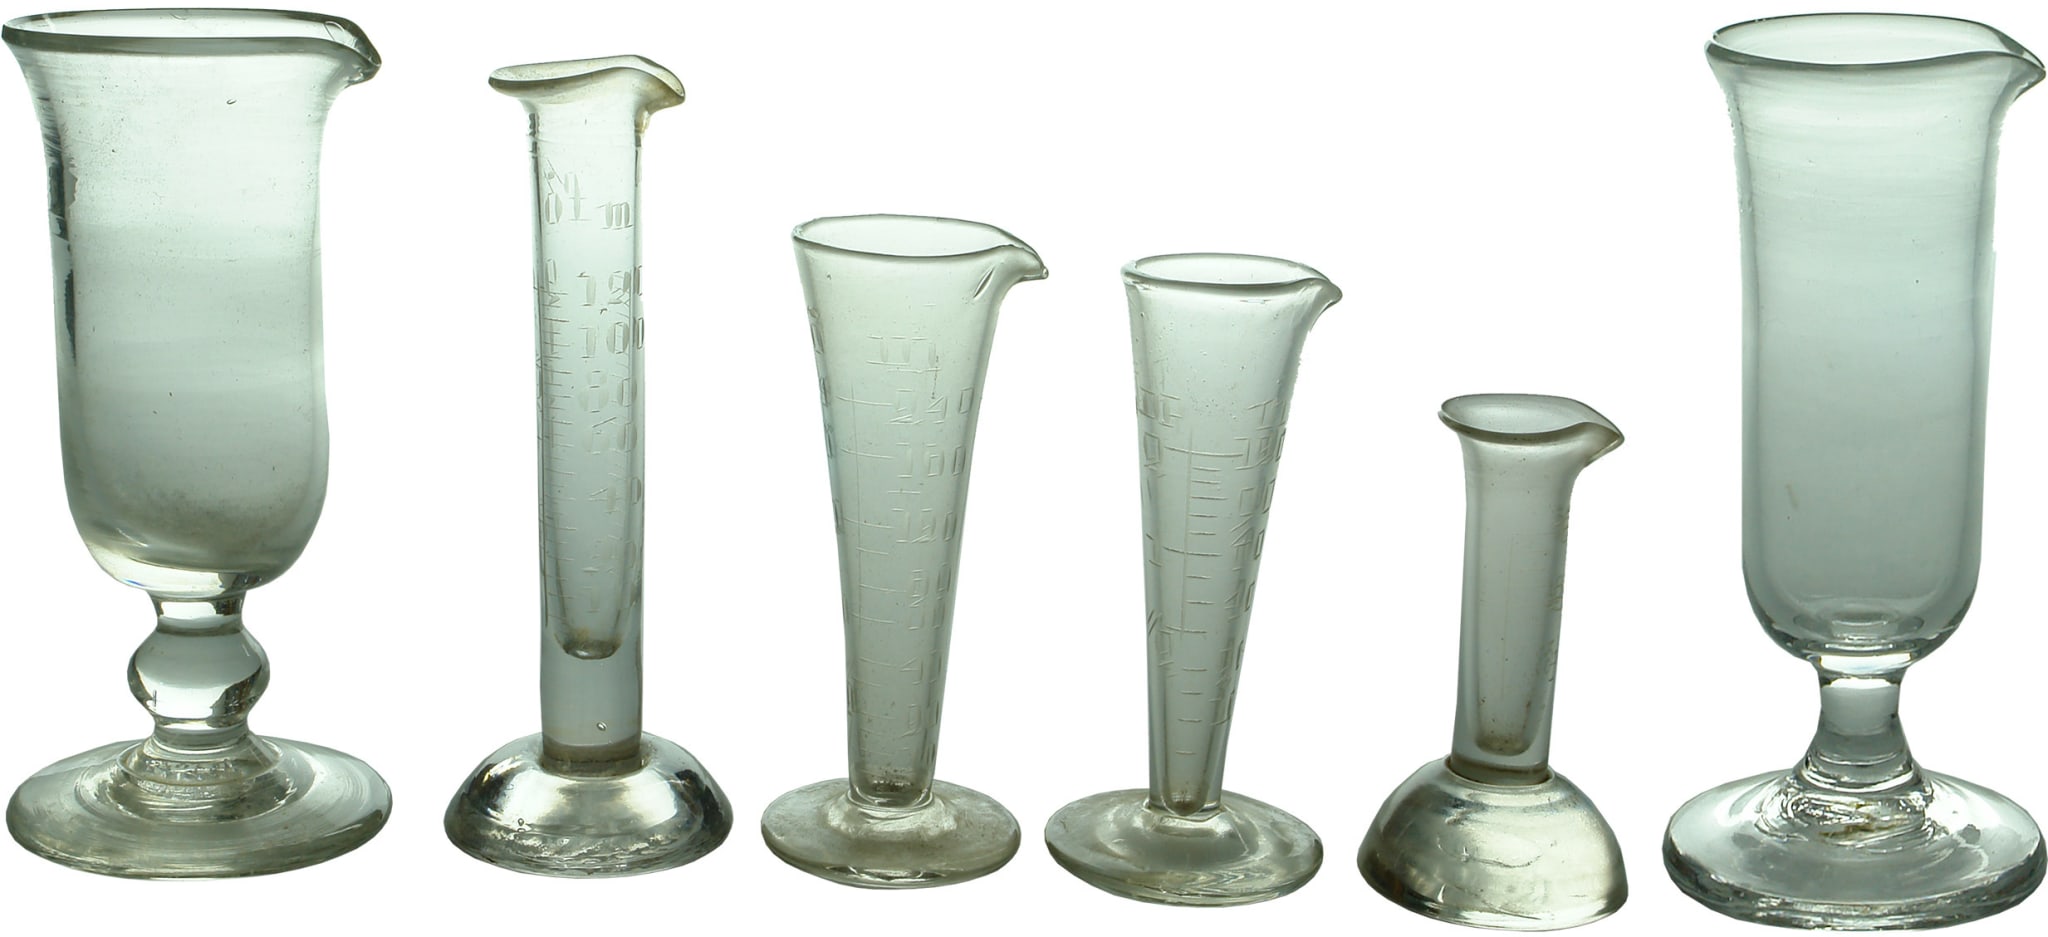 Antique Pharmacy Measuring beakers